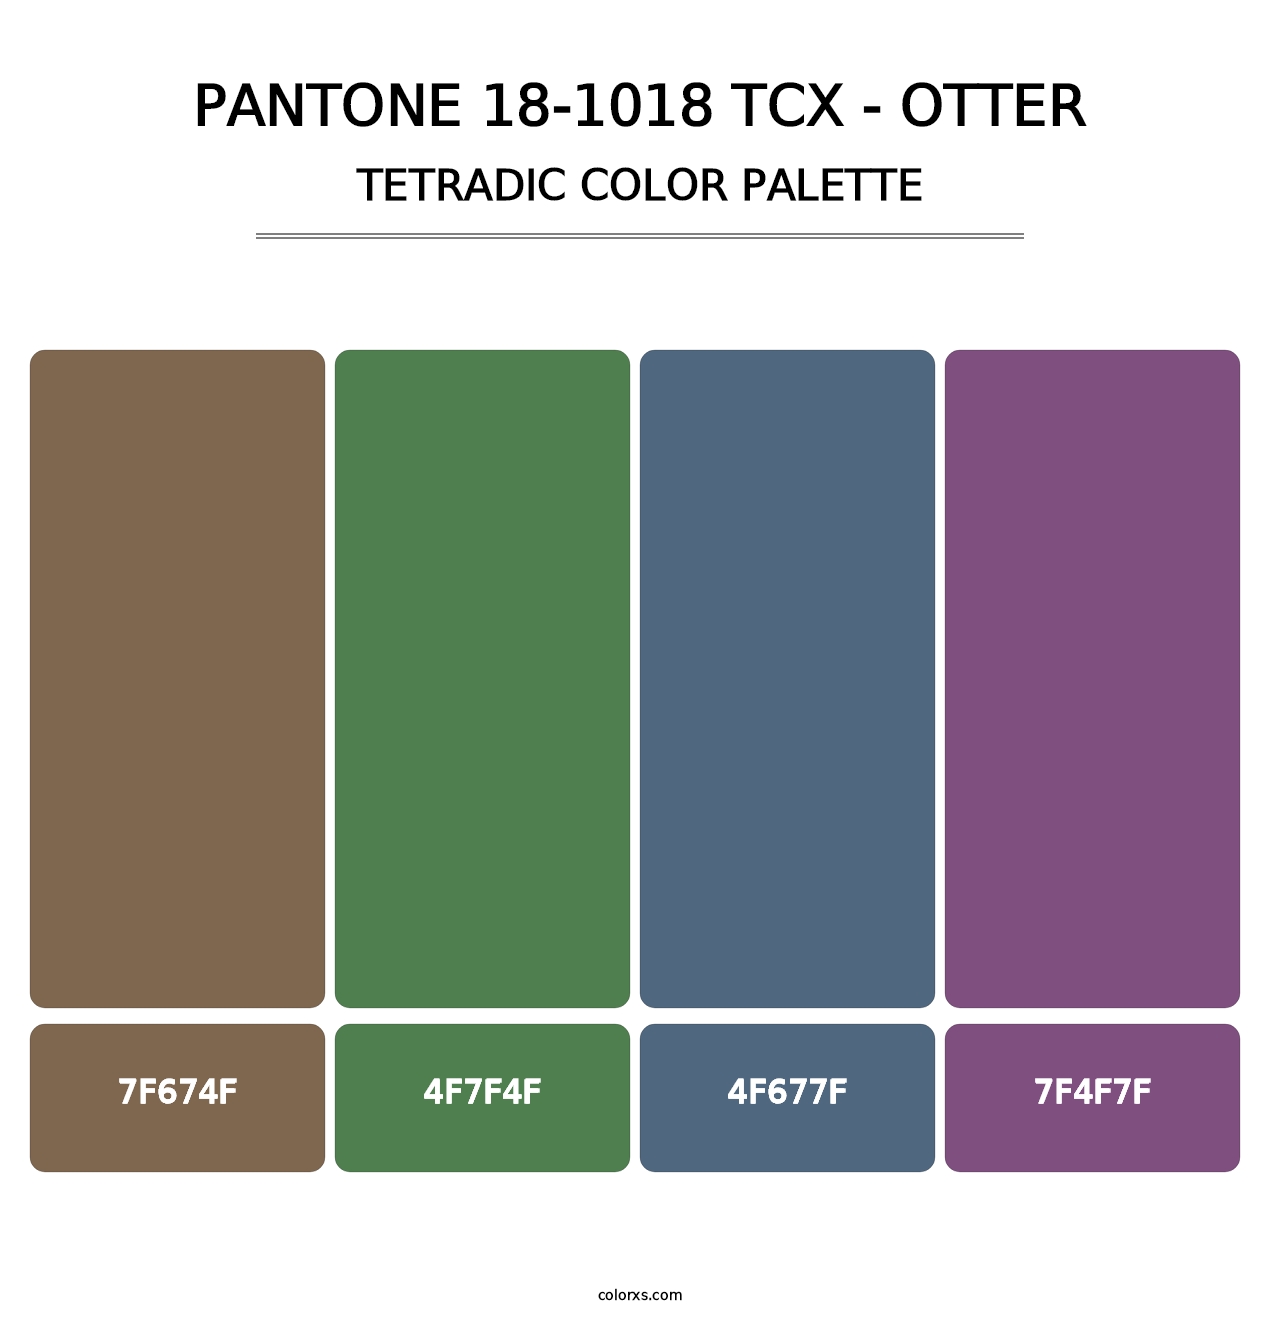 PANTONE 18-1018 TCX - Otter - Tetradic Color Palette